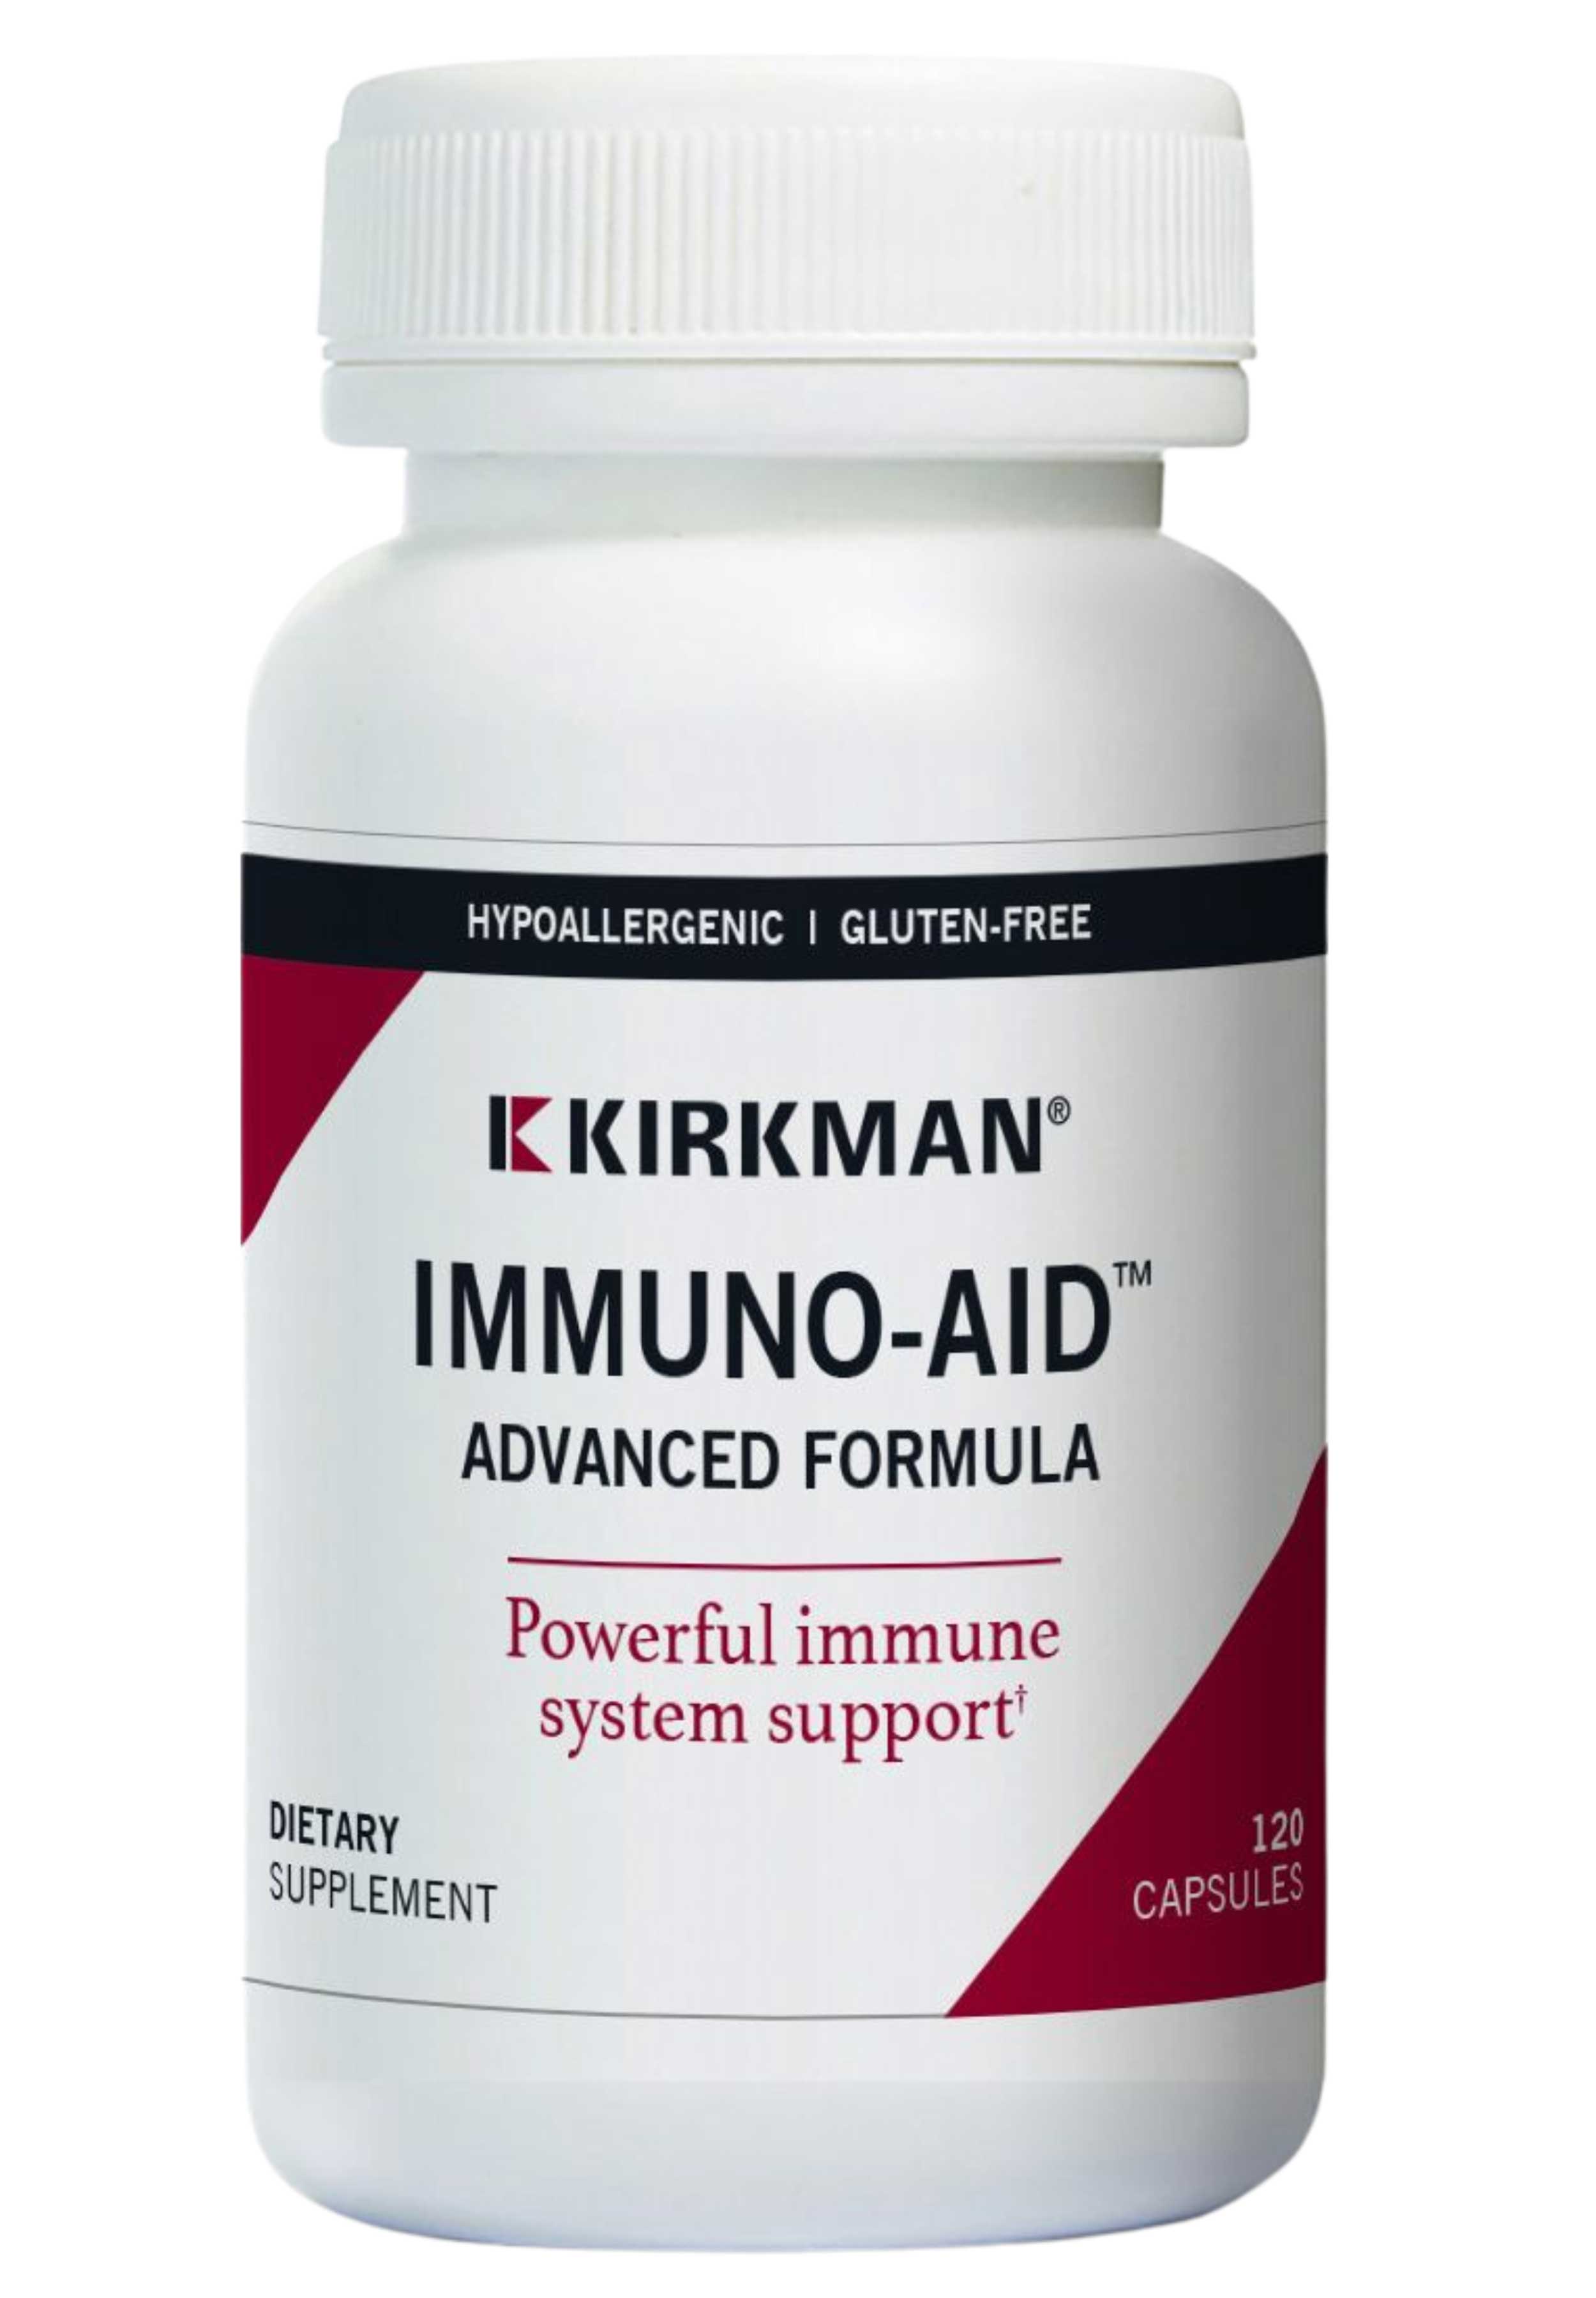 Kirkman Immuno-Aid Advanced Formula